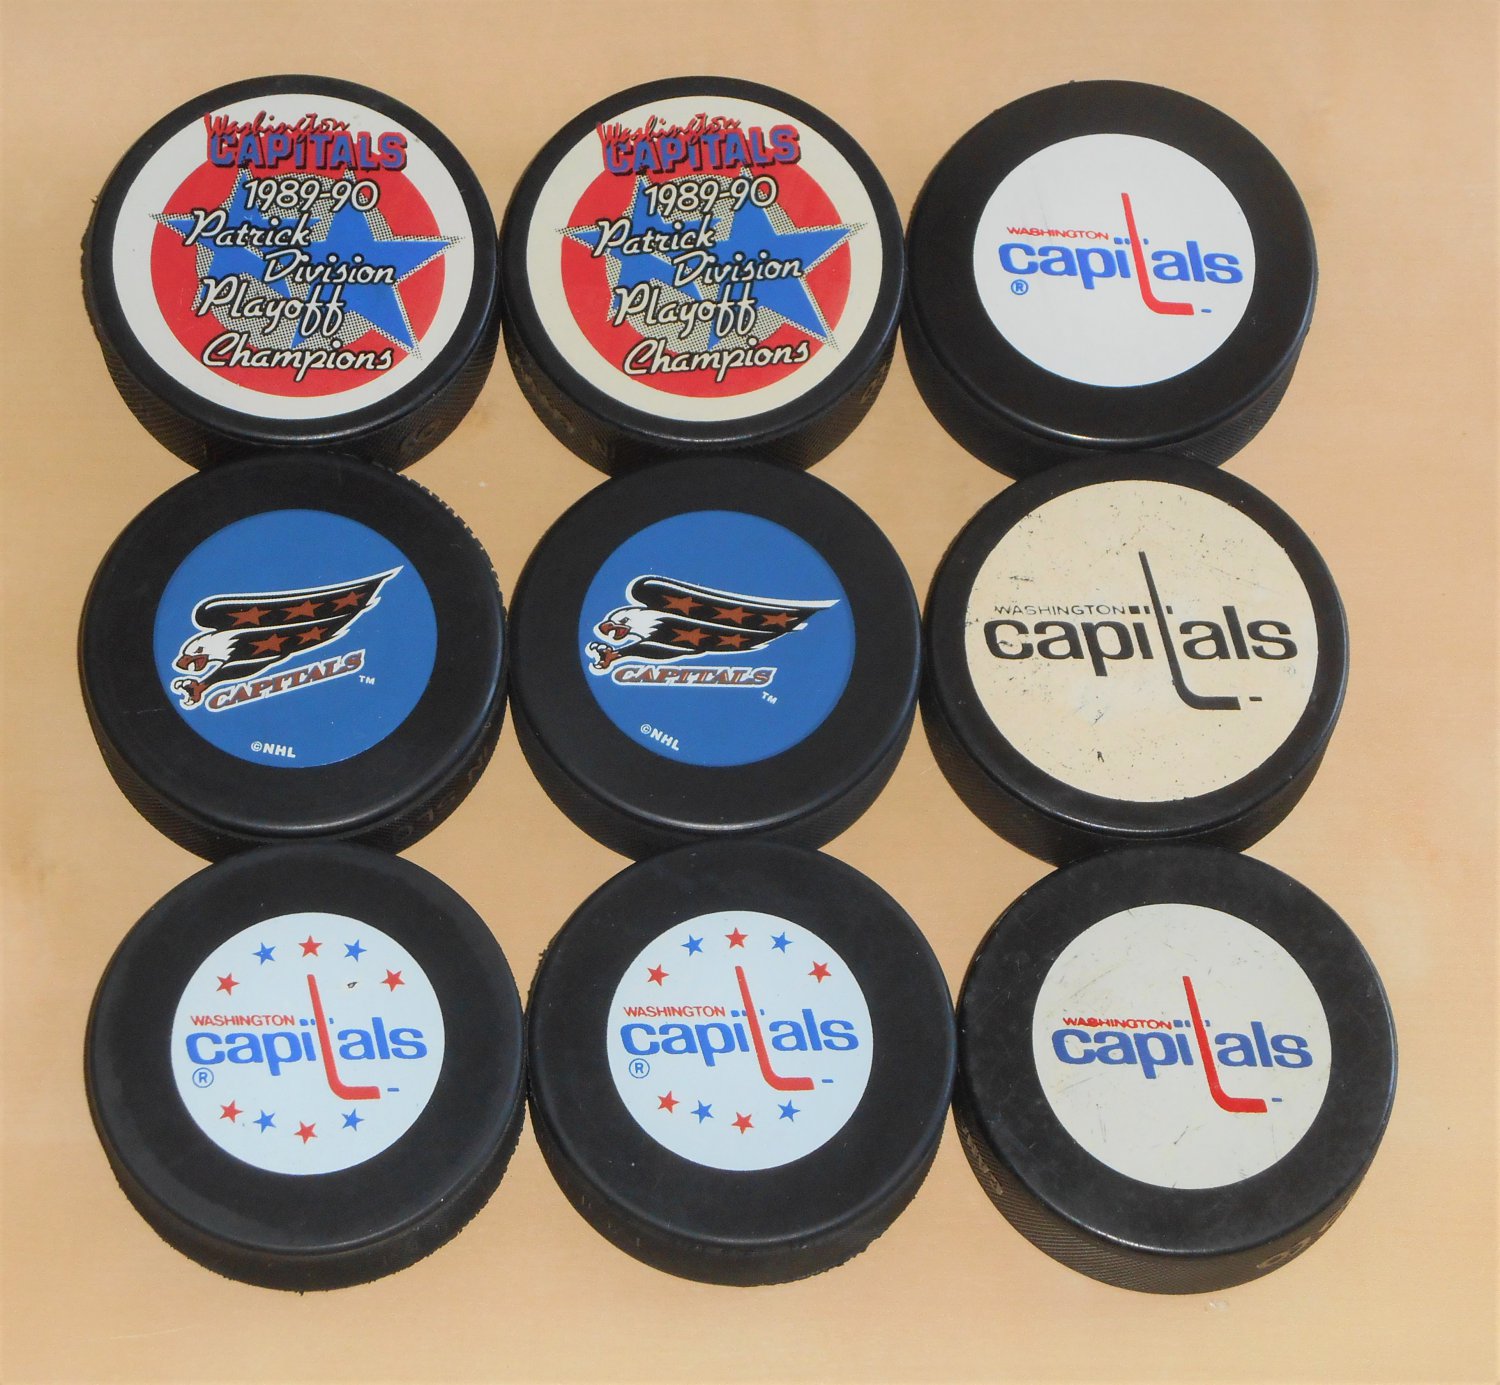 Washington Capitals NHL Souvenir Hockey Puck Lot Patrick Champions Mobil Chevy Chase Kay Jewelers